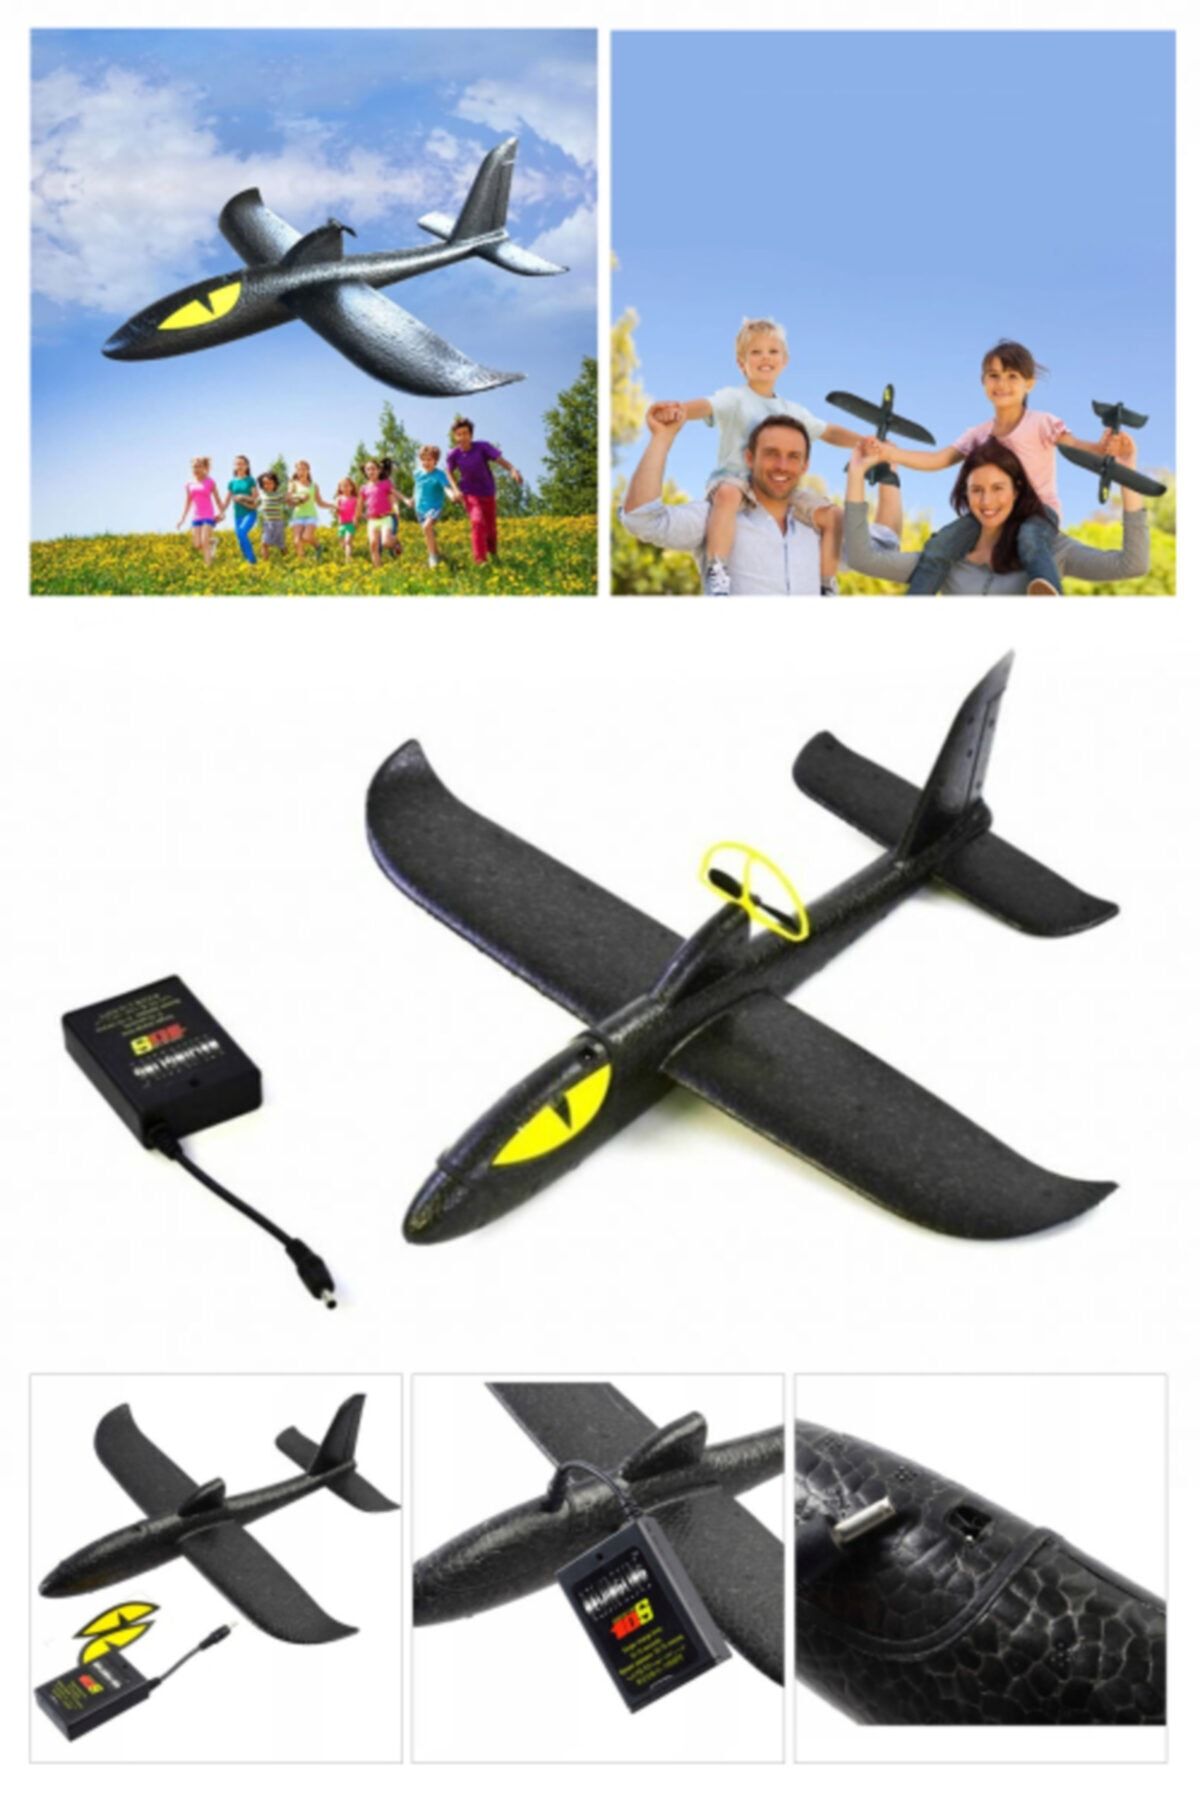 Xolo Siyah Panter Uçan Uçak Şarjlı Sünger Kırılmaz Uçak